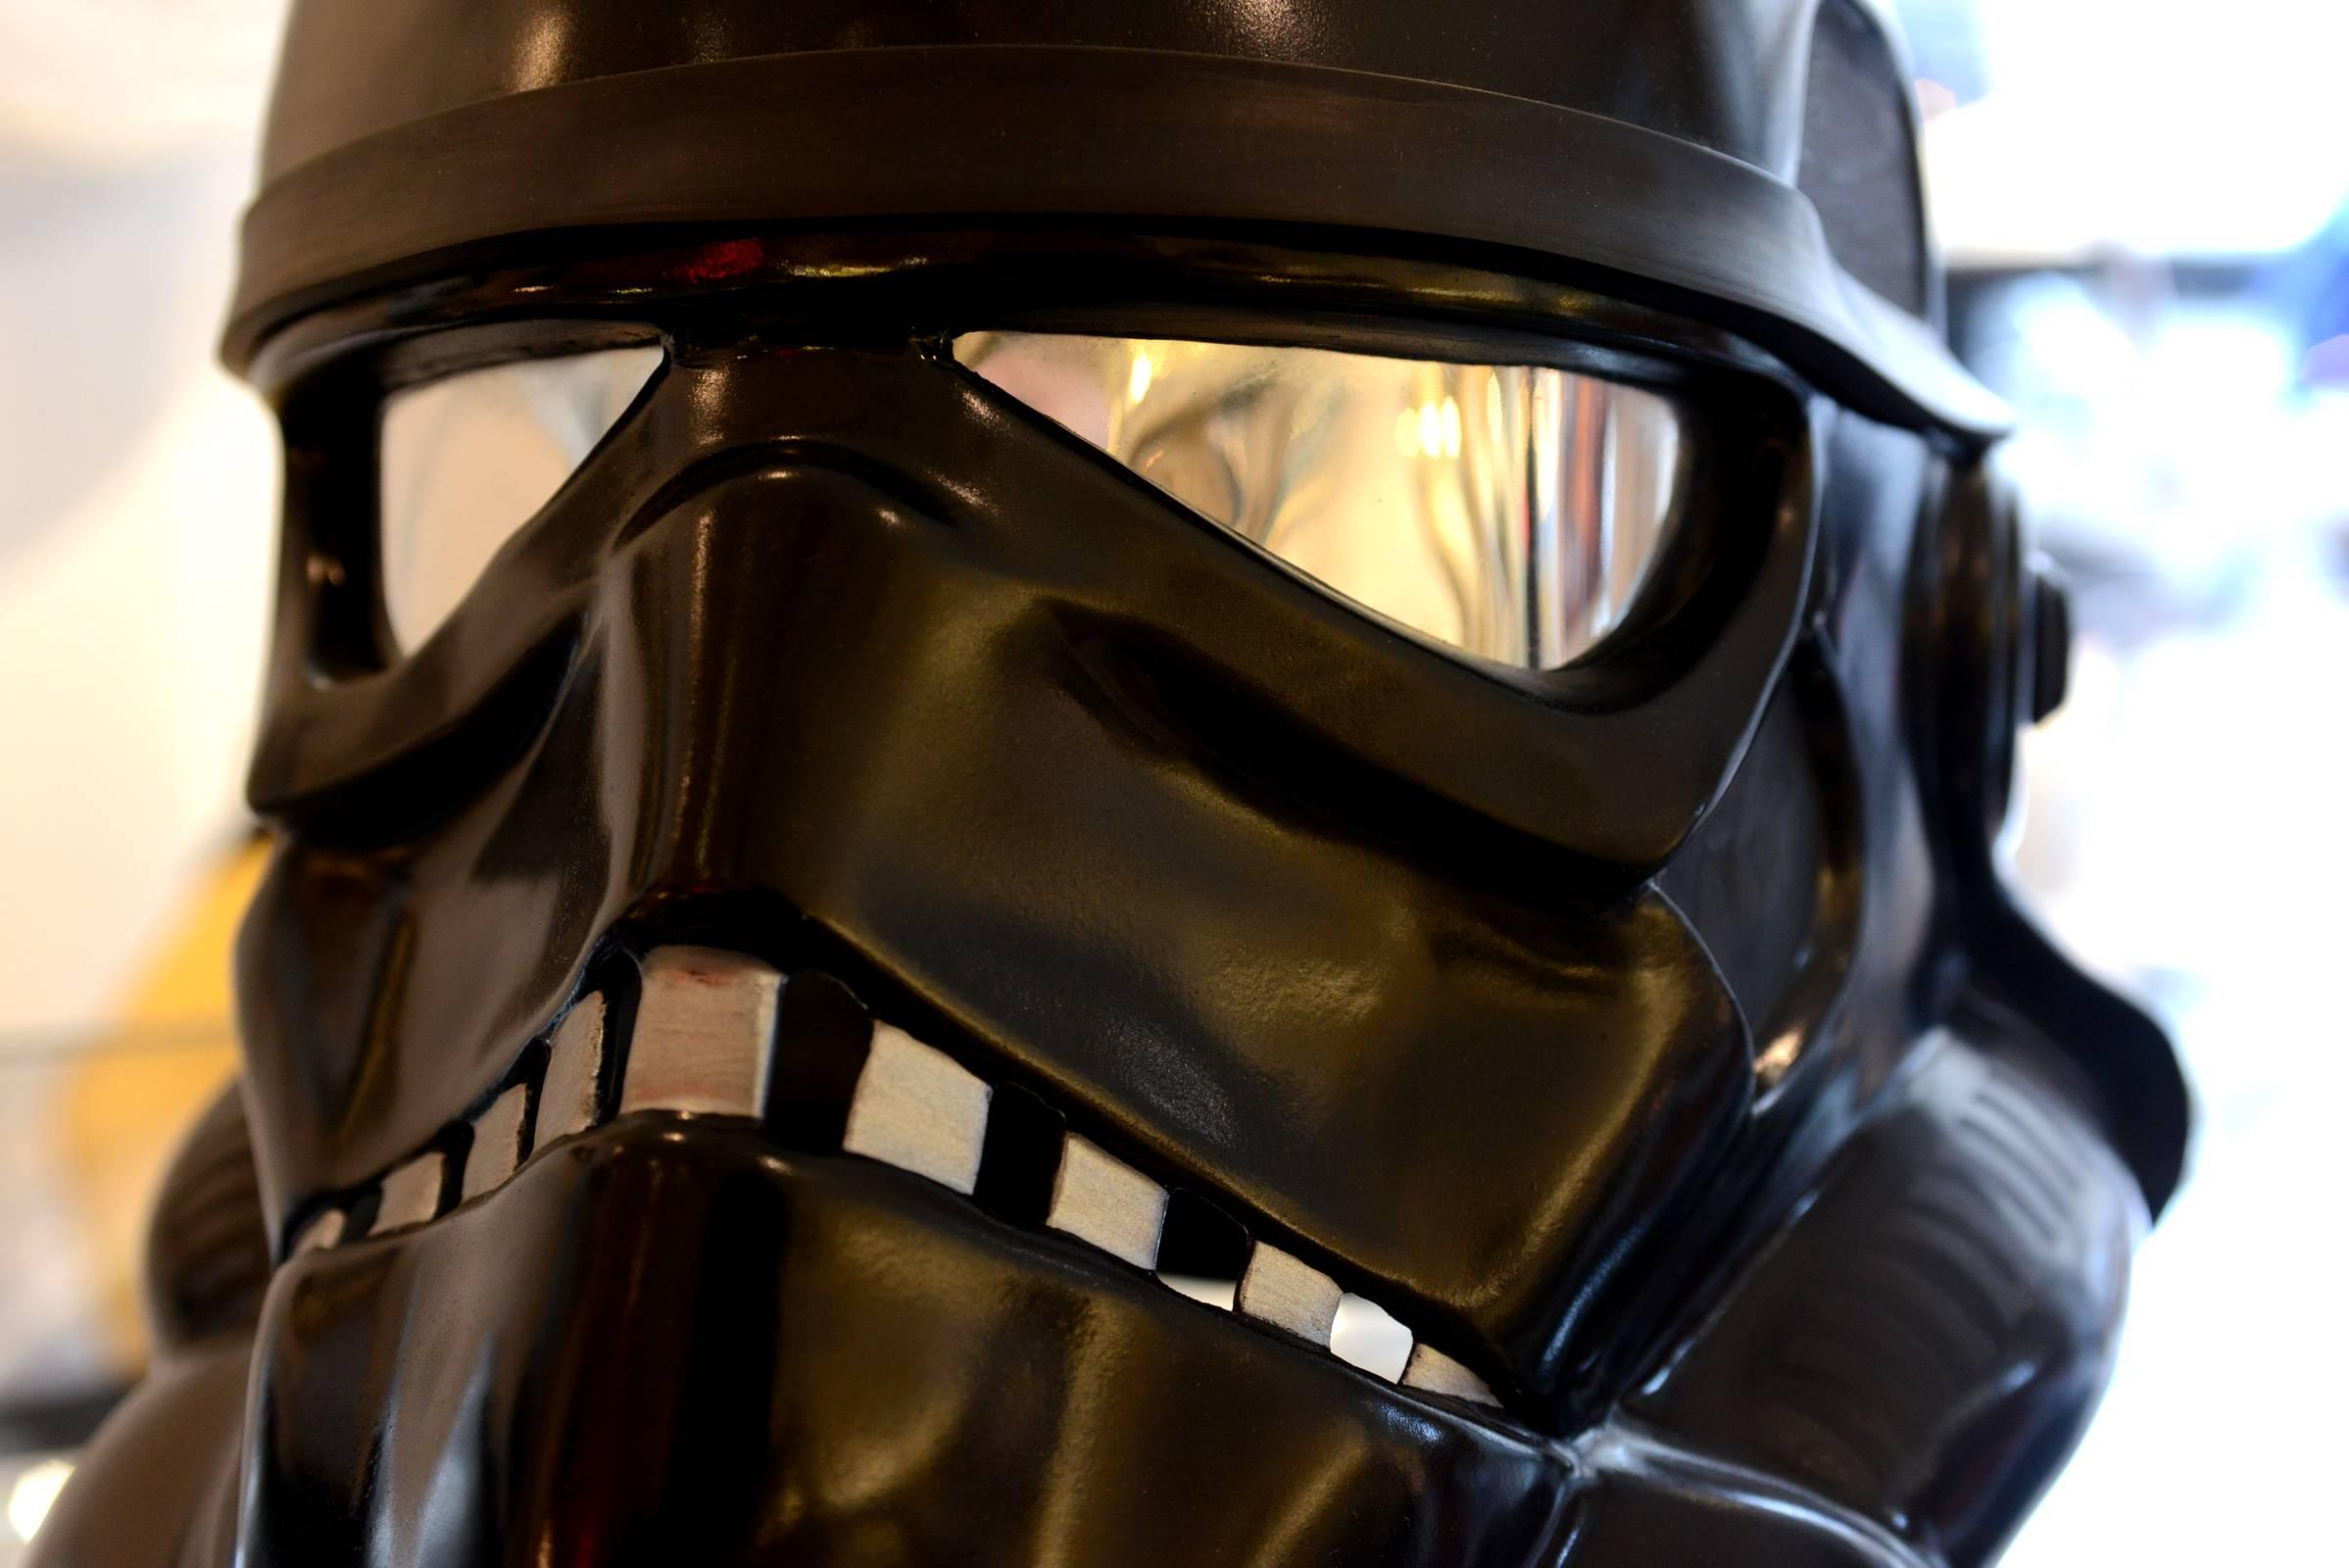 Helmet star wars imperial black Stormtrooper
Actual size, exceptional piece in resin.
